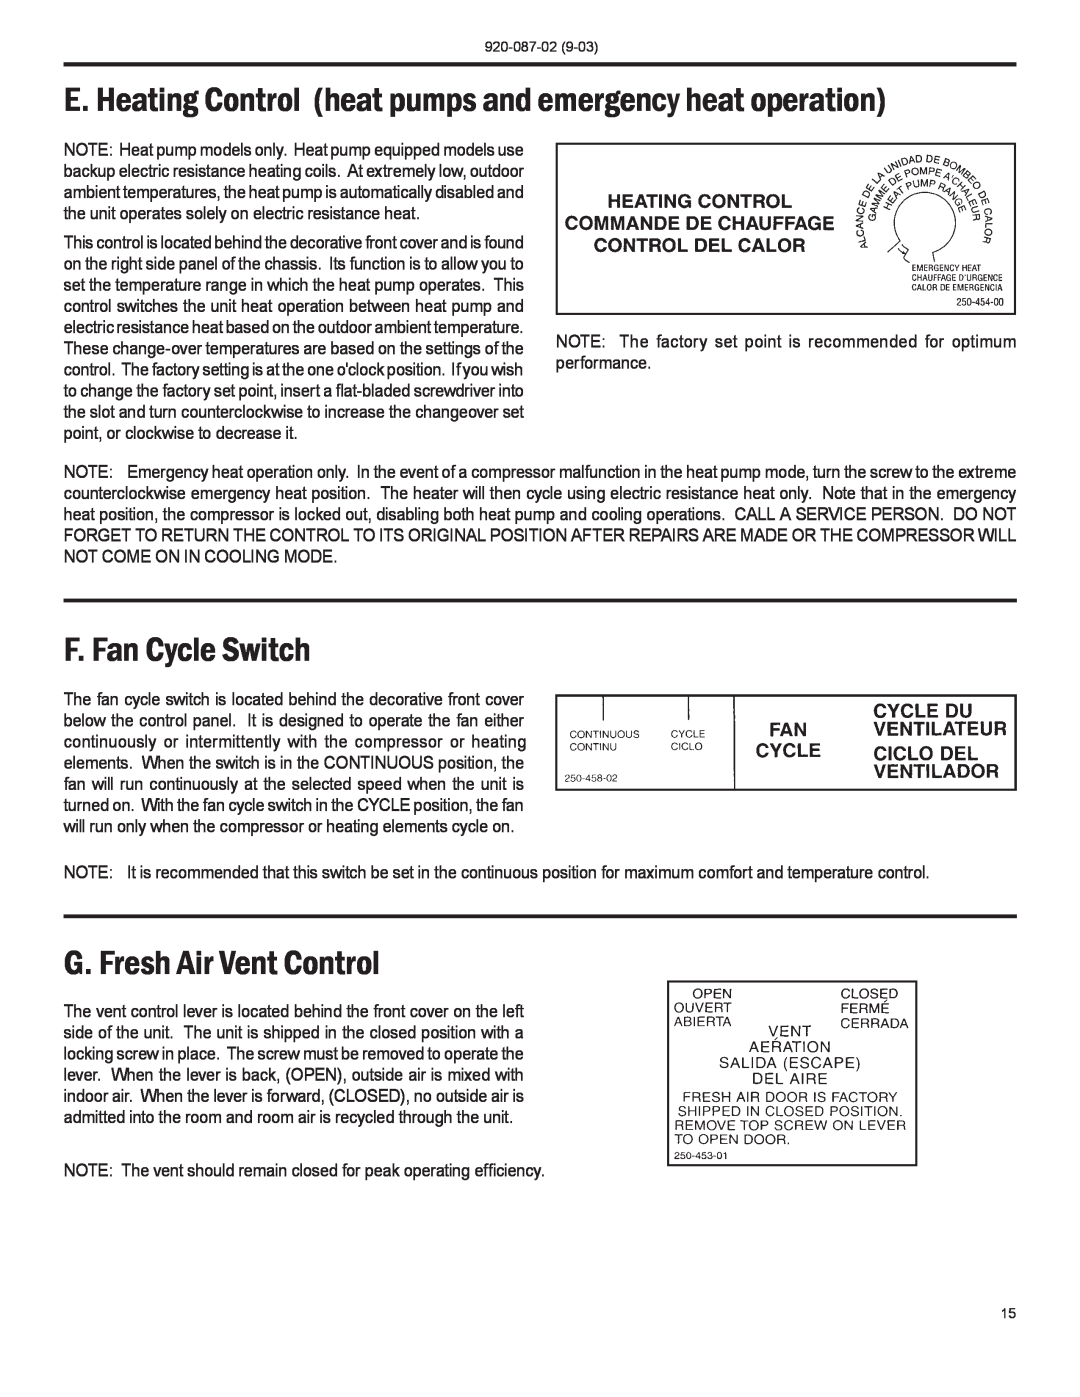 Friedrich PTAC operation manual F. Fan Cycle Switch, G. Fresh Air Vent Control 